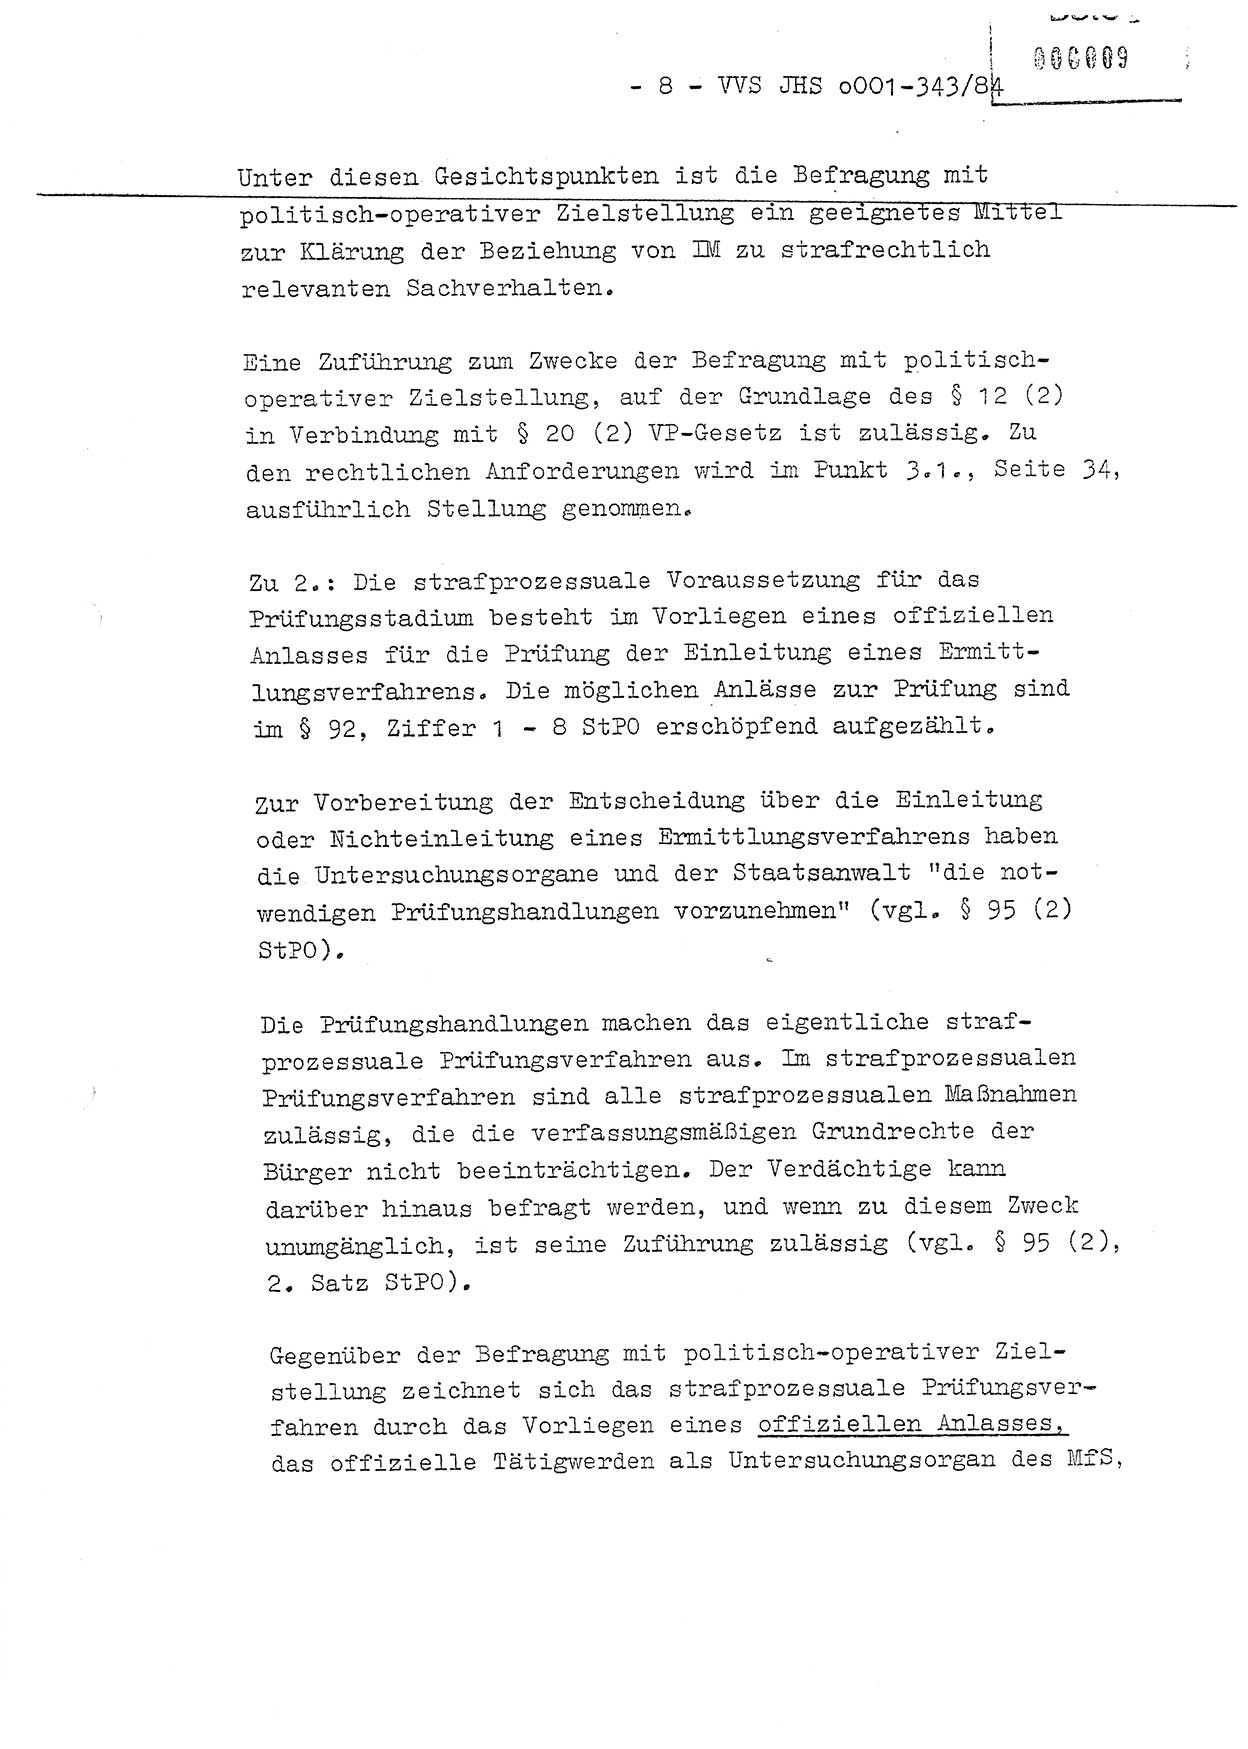 Diplomarbeit, Oberleutnant Bernd Michael (HA Ⅸ/5), Oberleutnant Peter Felber (HA IX/5), Ministerium für Staatssicherheit (MfS) [Deutsche Demokratische Republik (DDR)], Juristische Hochschule (JHS), Vertrauliche Verschlußsache (VVS) o001-343/84, Potsdam 1985, Seite 8 (Dipl.-Arb. MfS DDR JHS VVS o001-343/84 1985, S. 8)